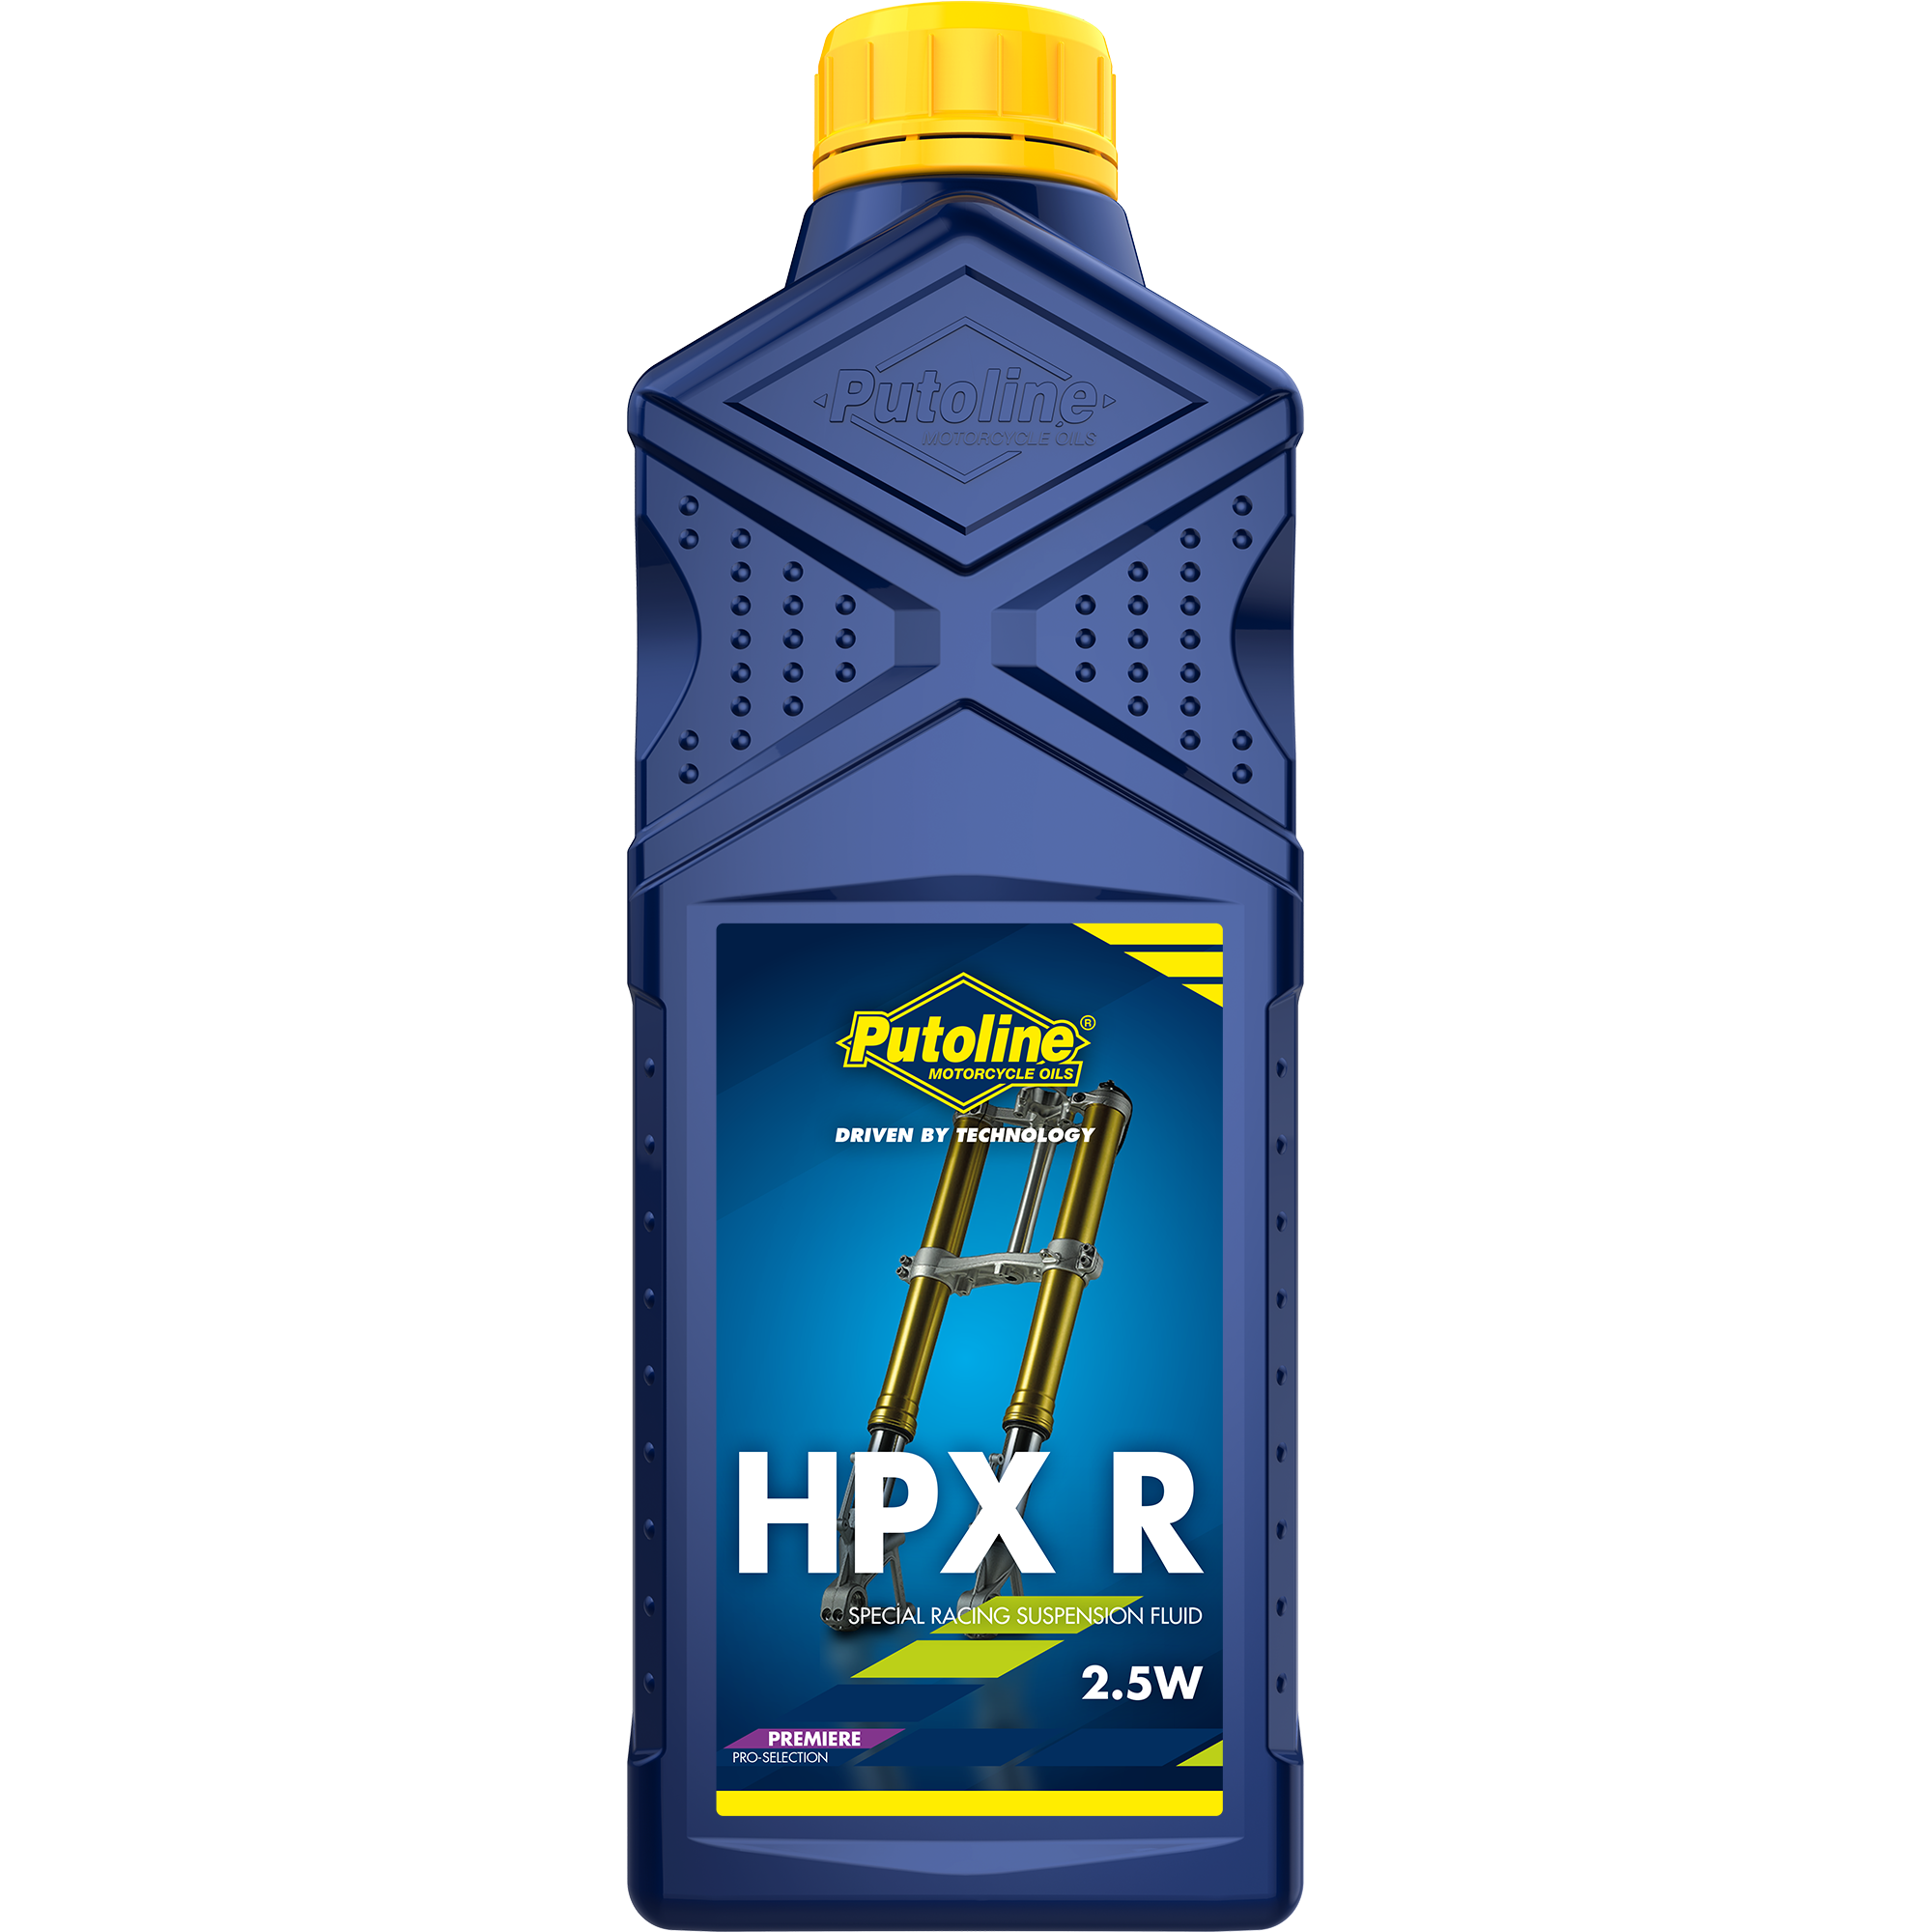 Putoline HPX R 2.5W, 12 x 1 lt detail 2